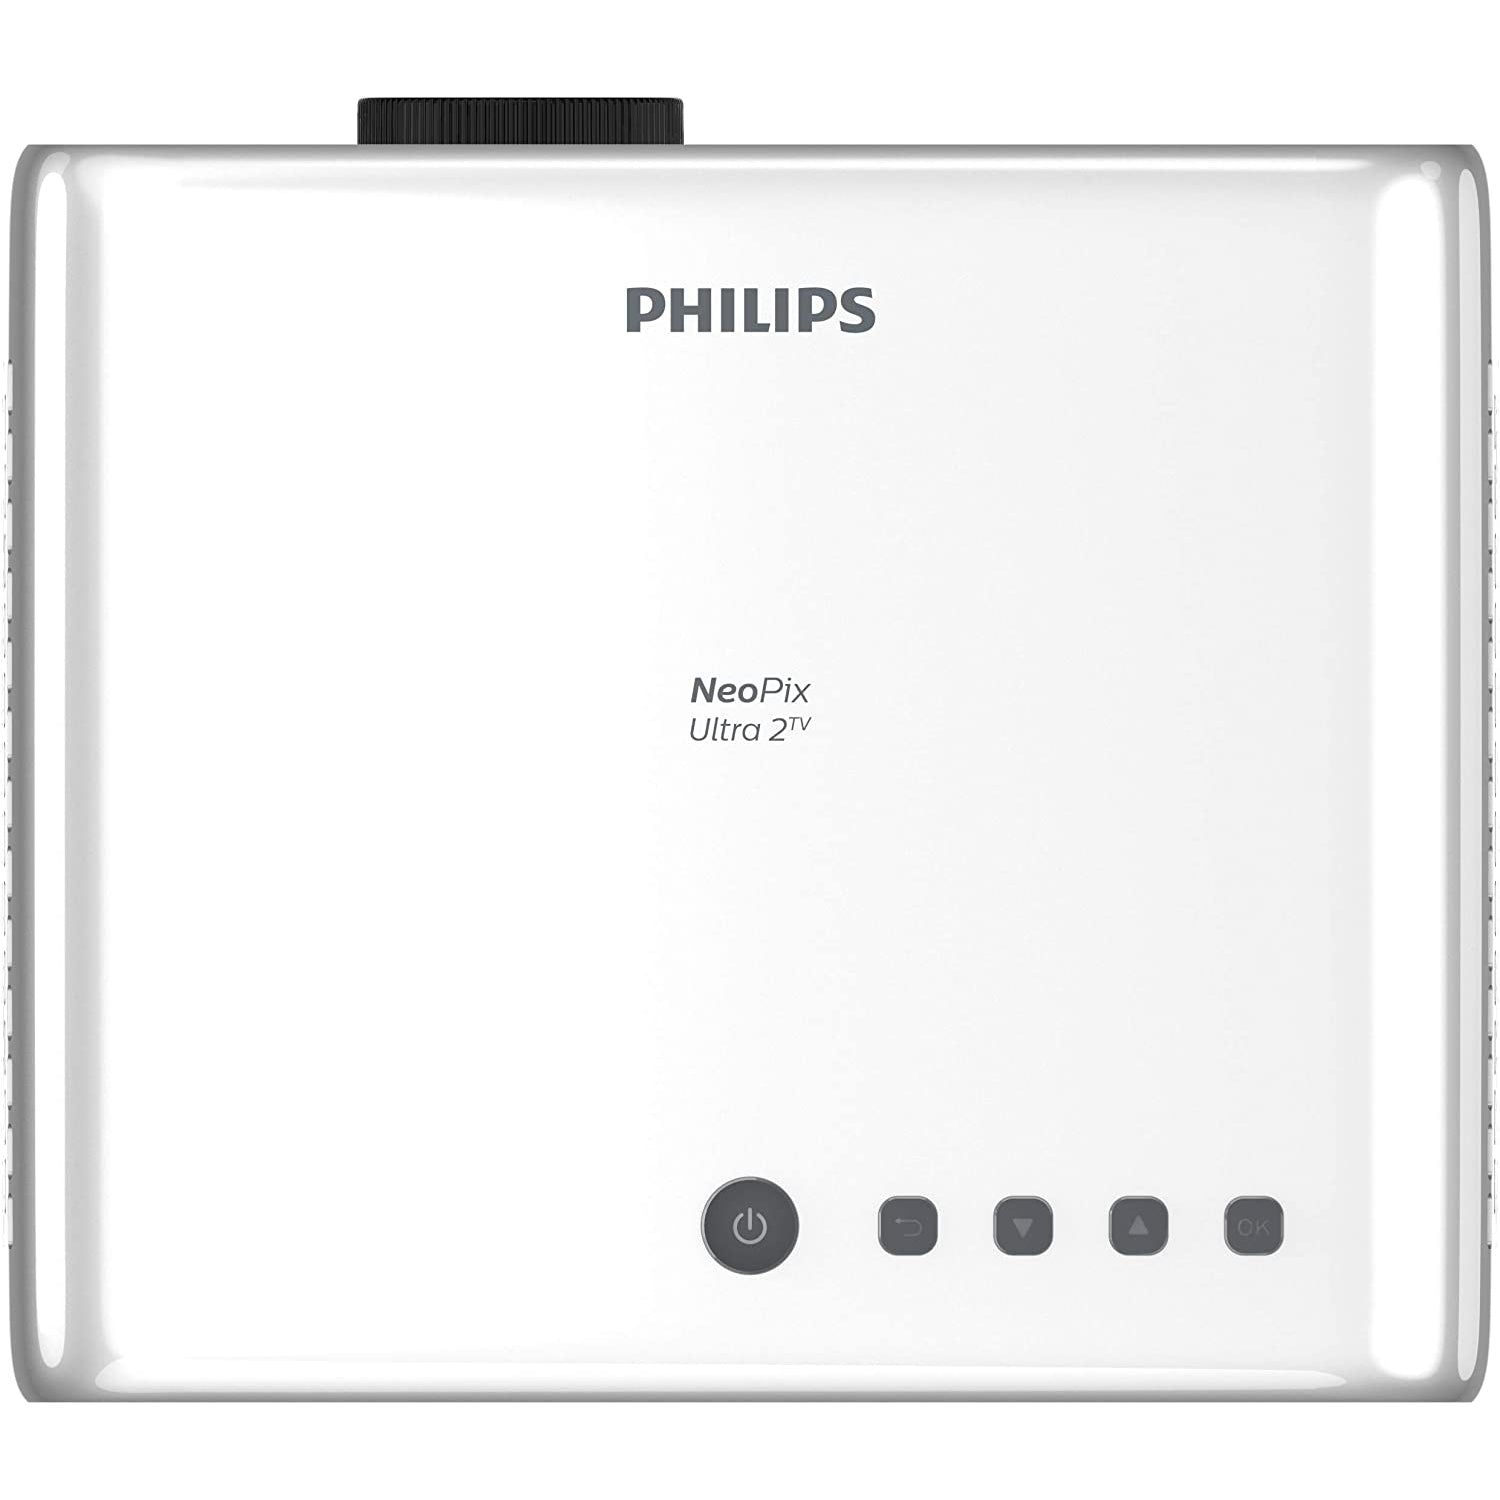 Philips NeoPix Ultra 2TV NPX643 Smart Full HD Home Cinema Projector - Refurbished Pristine